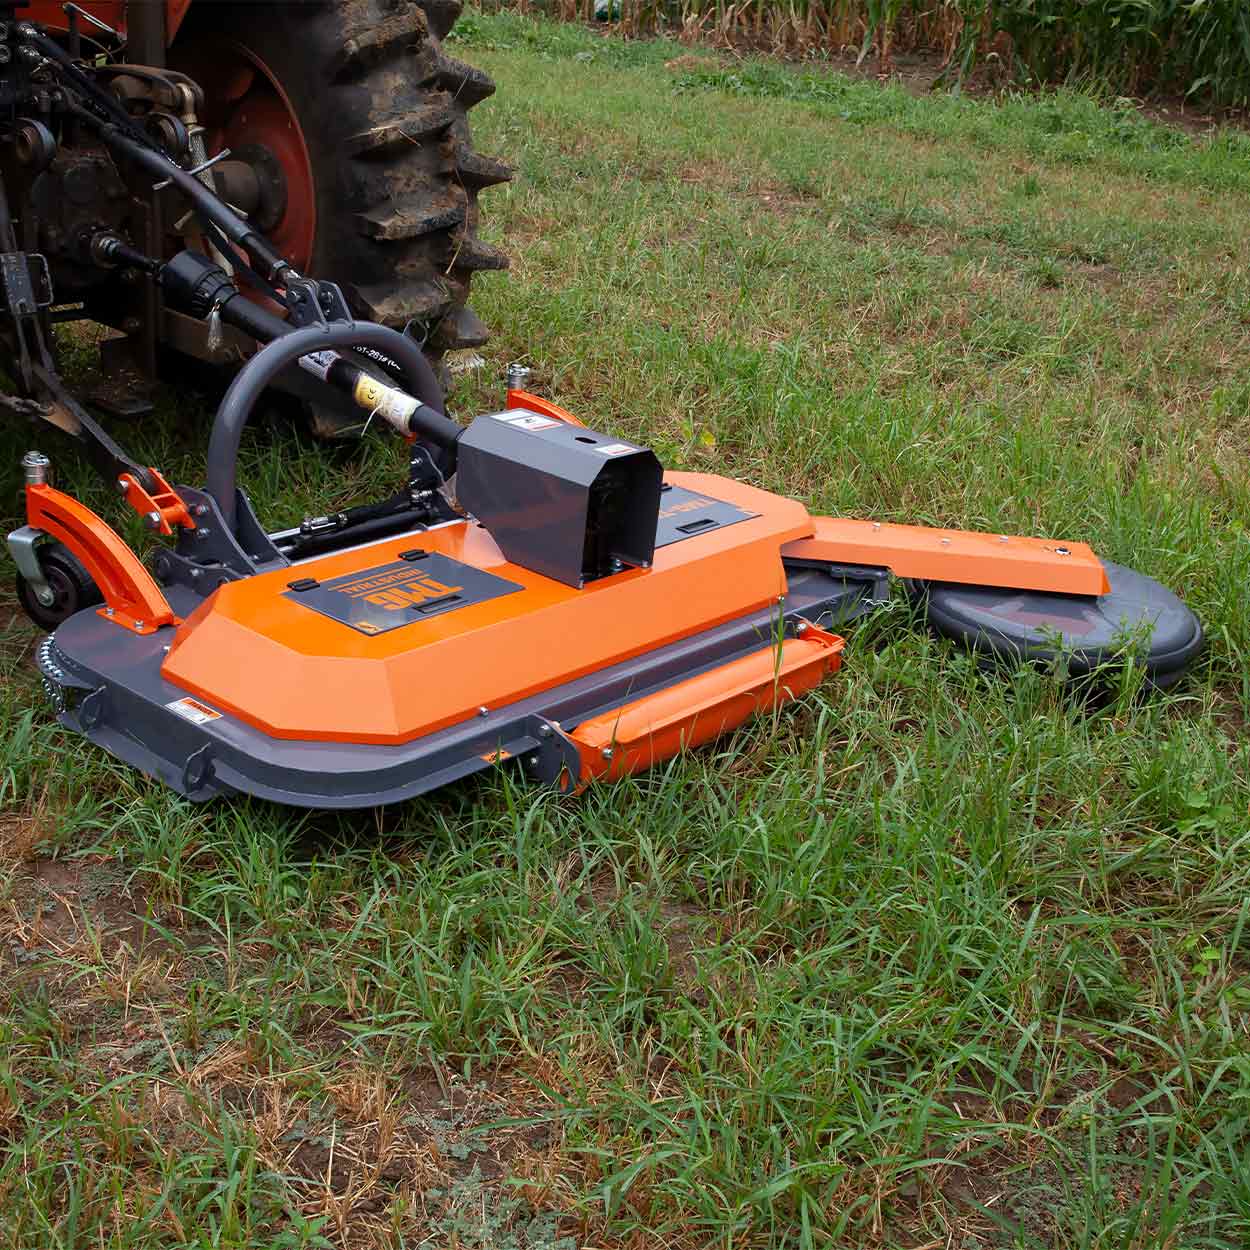 TMG Industrial 70” Offset Orchard Finishing Weeding Mower w/Swivel-Arm Disc Device, 3-Point Hitch, TMG-TMO70